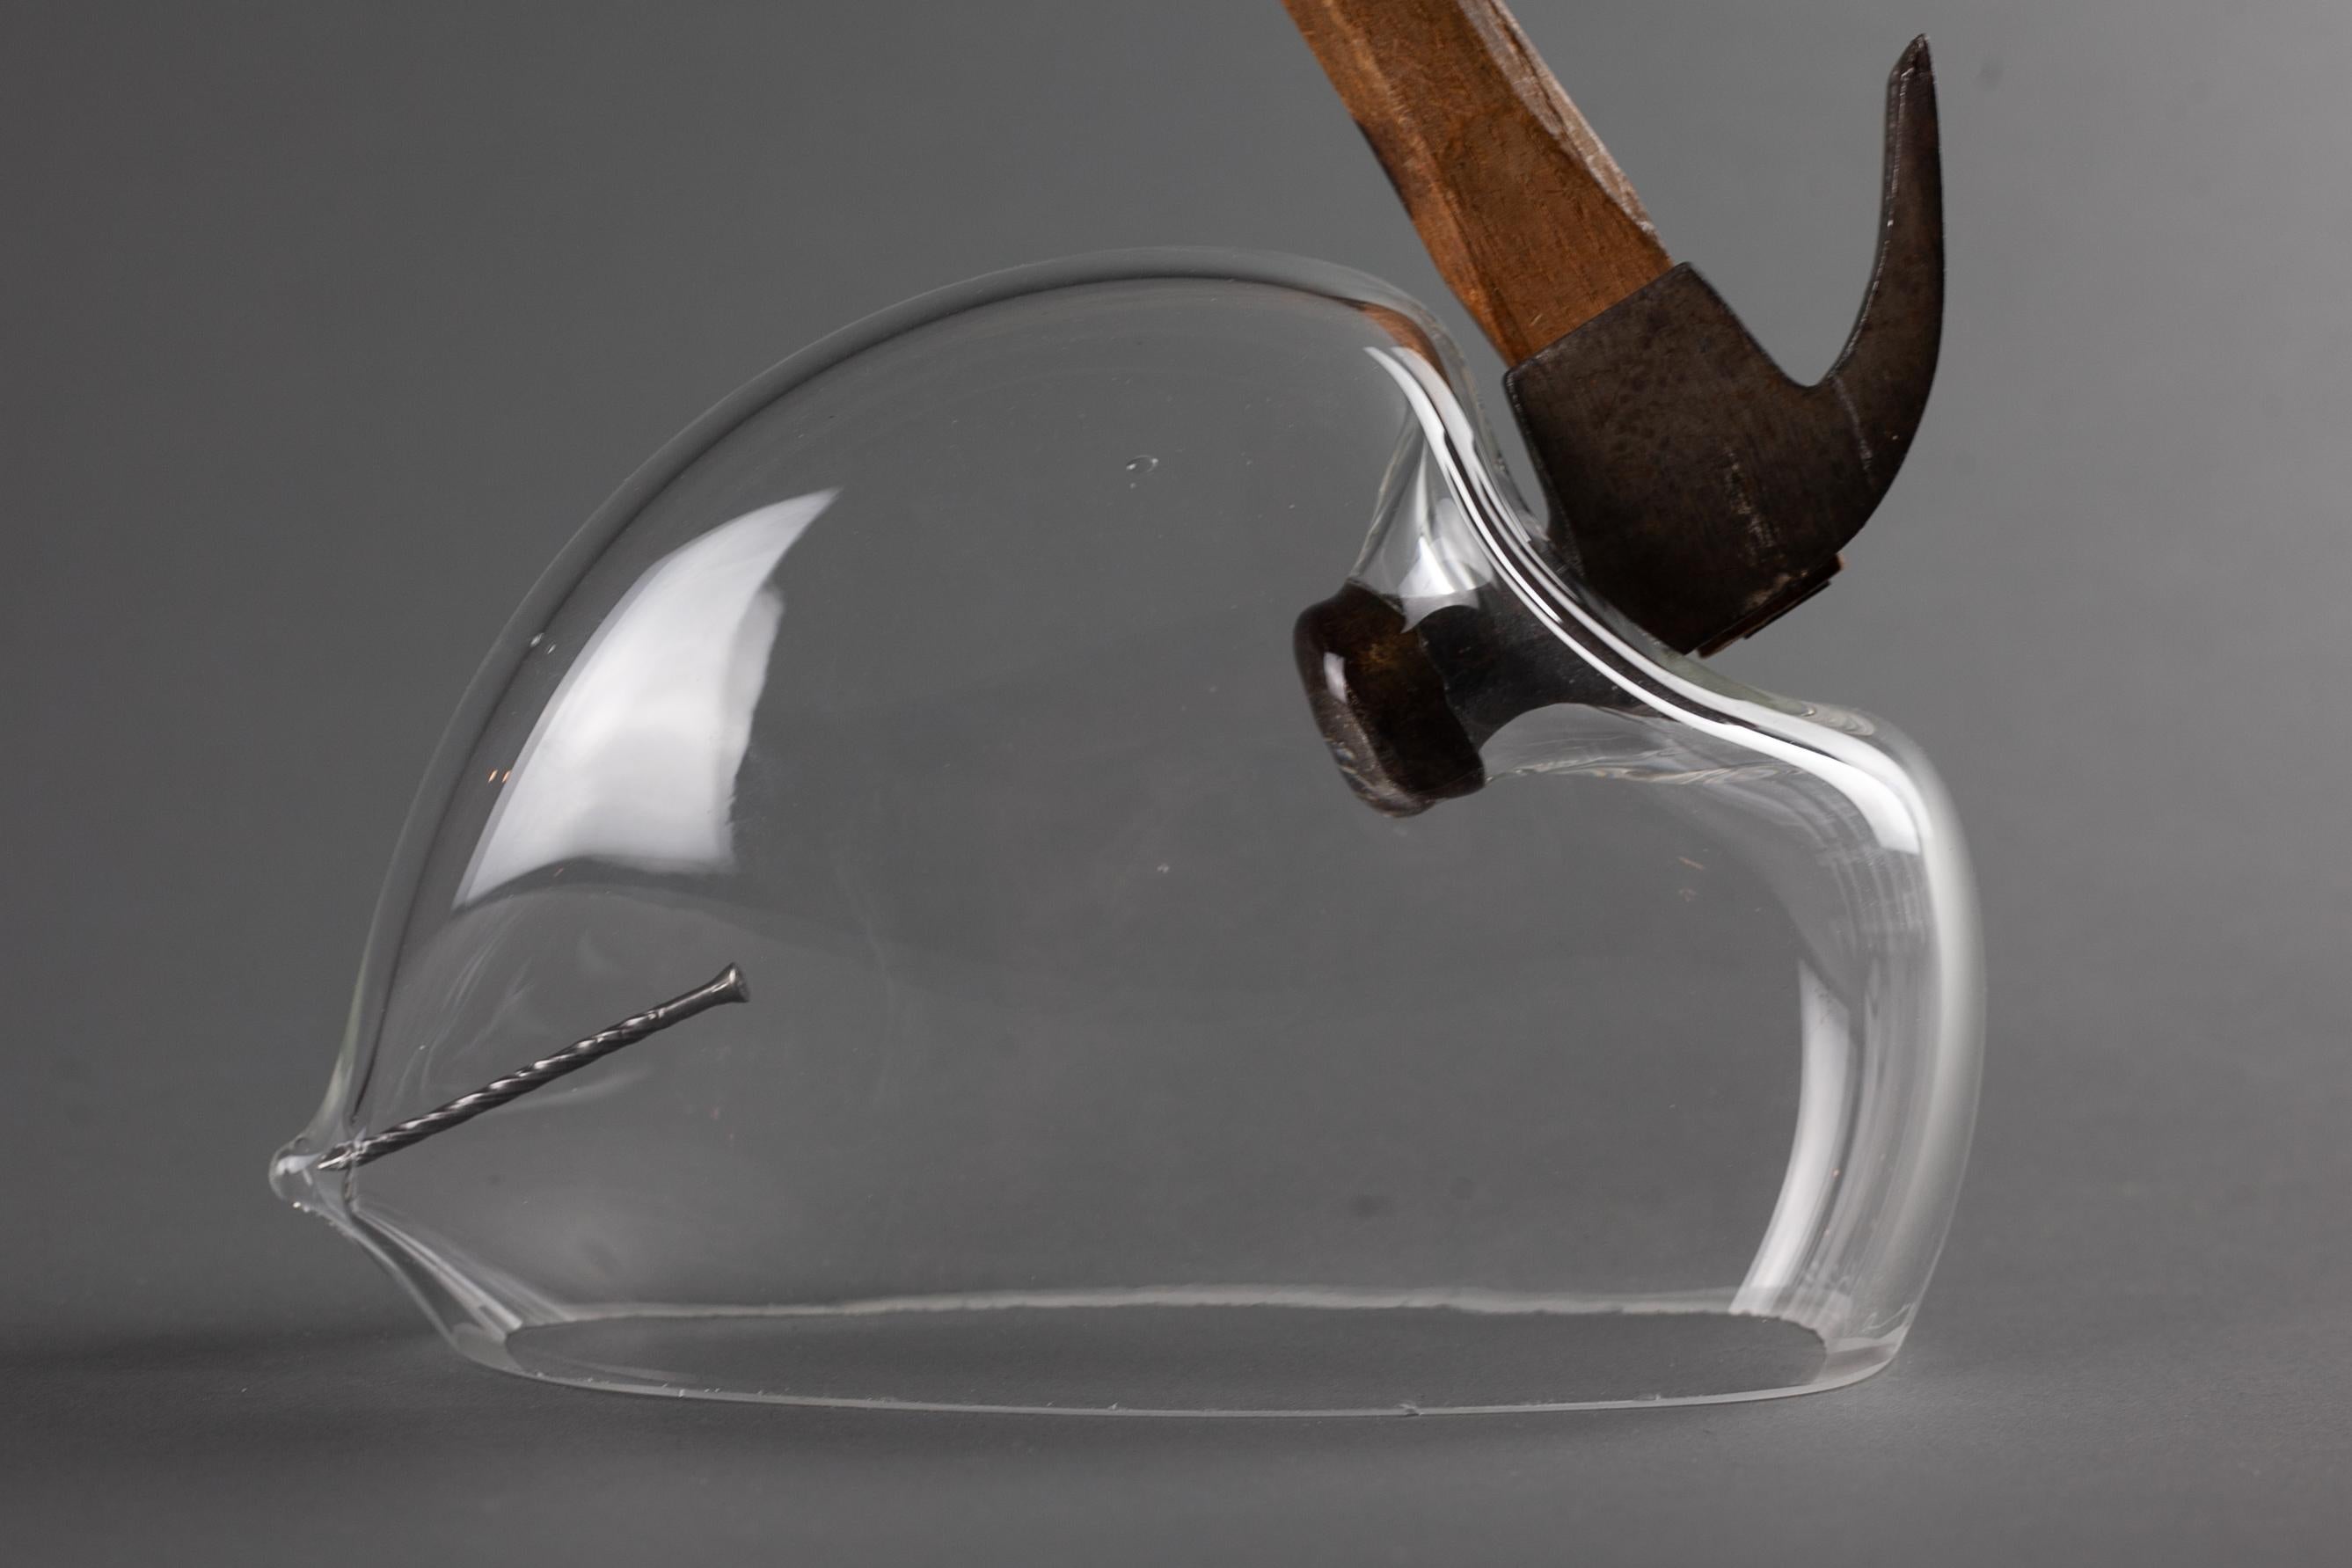 Movement Study (blown glass nail hammer table top object sculpture Chihuly) - Folk Art Mixed Media Art by Robert Burch